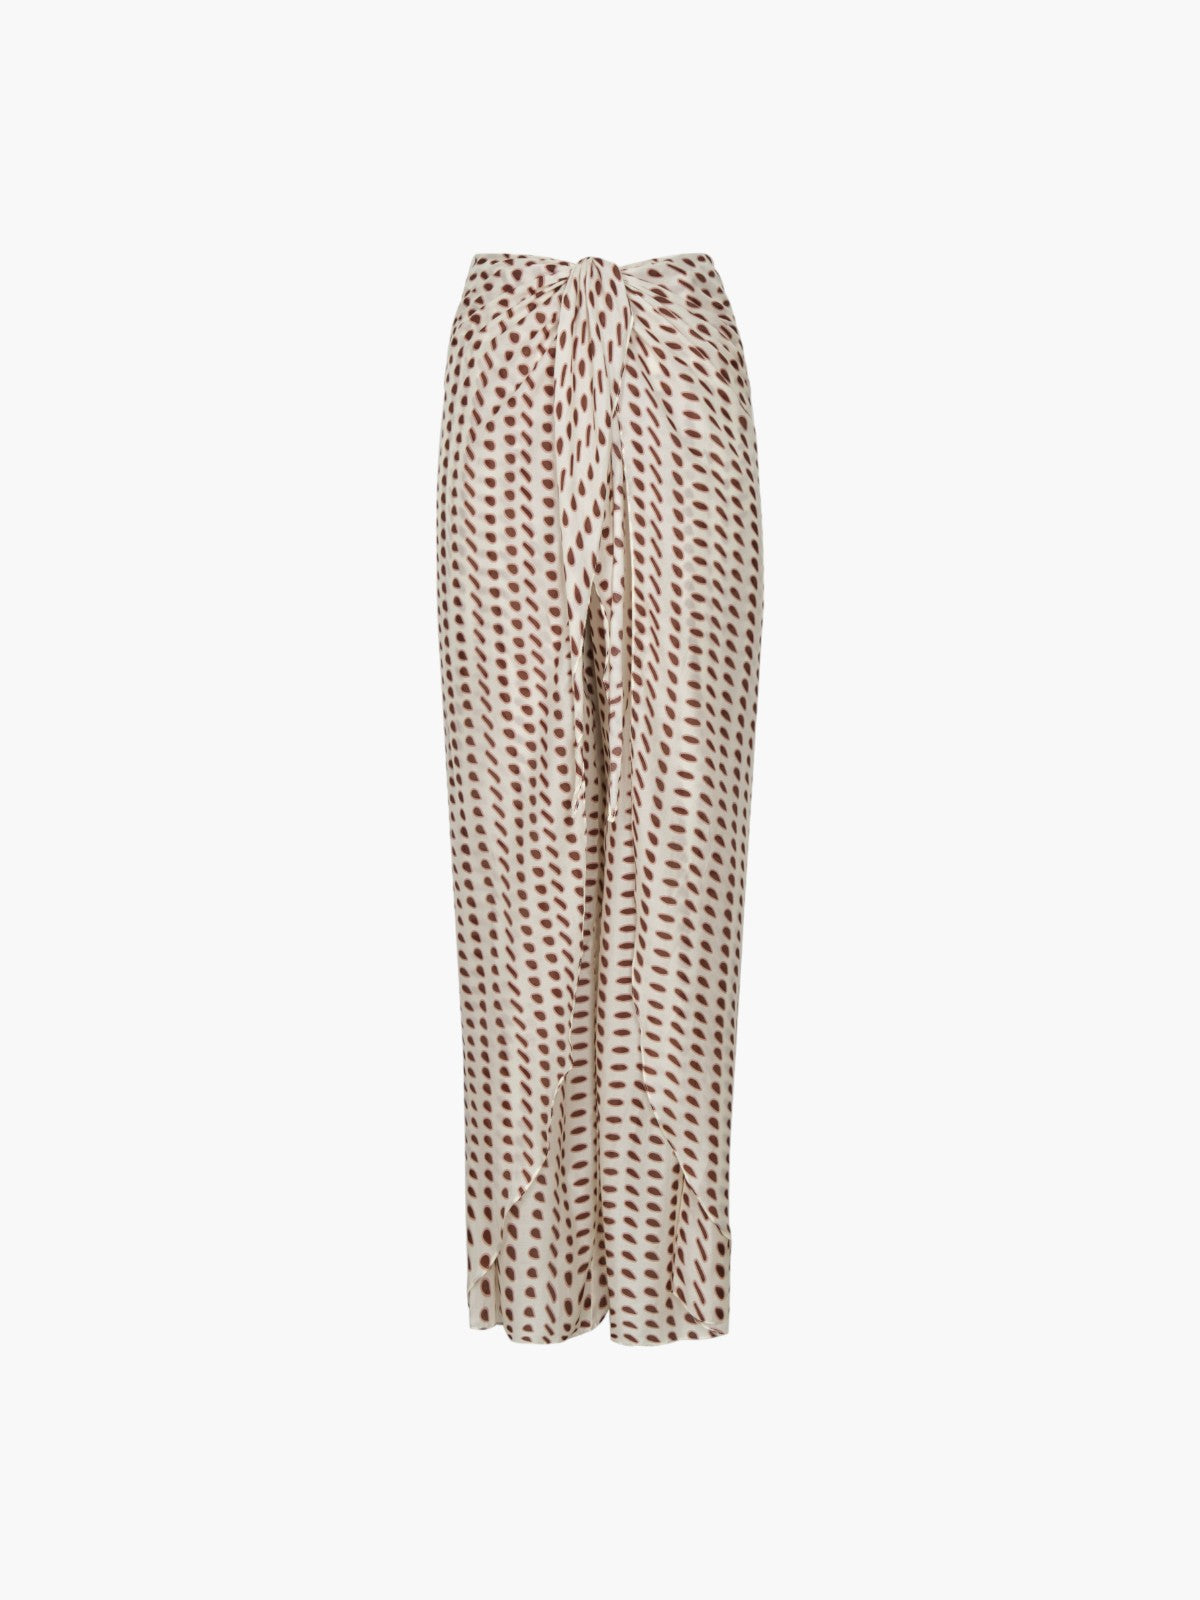 AKRIS Farrah Trousers High Rise Cream Calla Cotton Silk Stretch Pants Size  16 | eBay